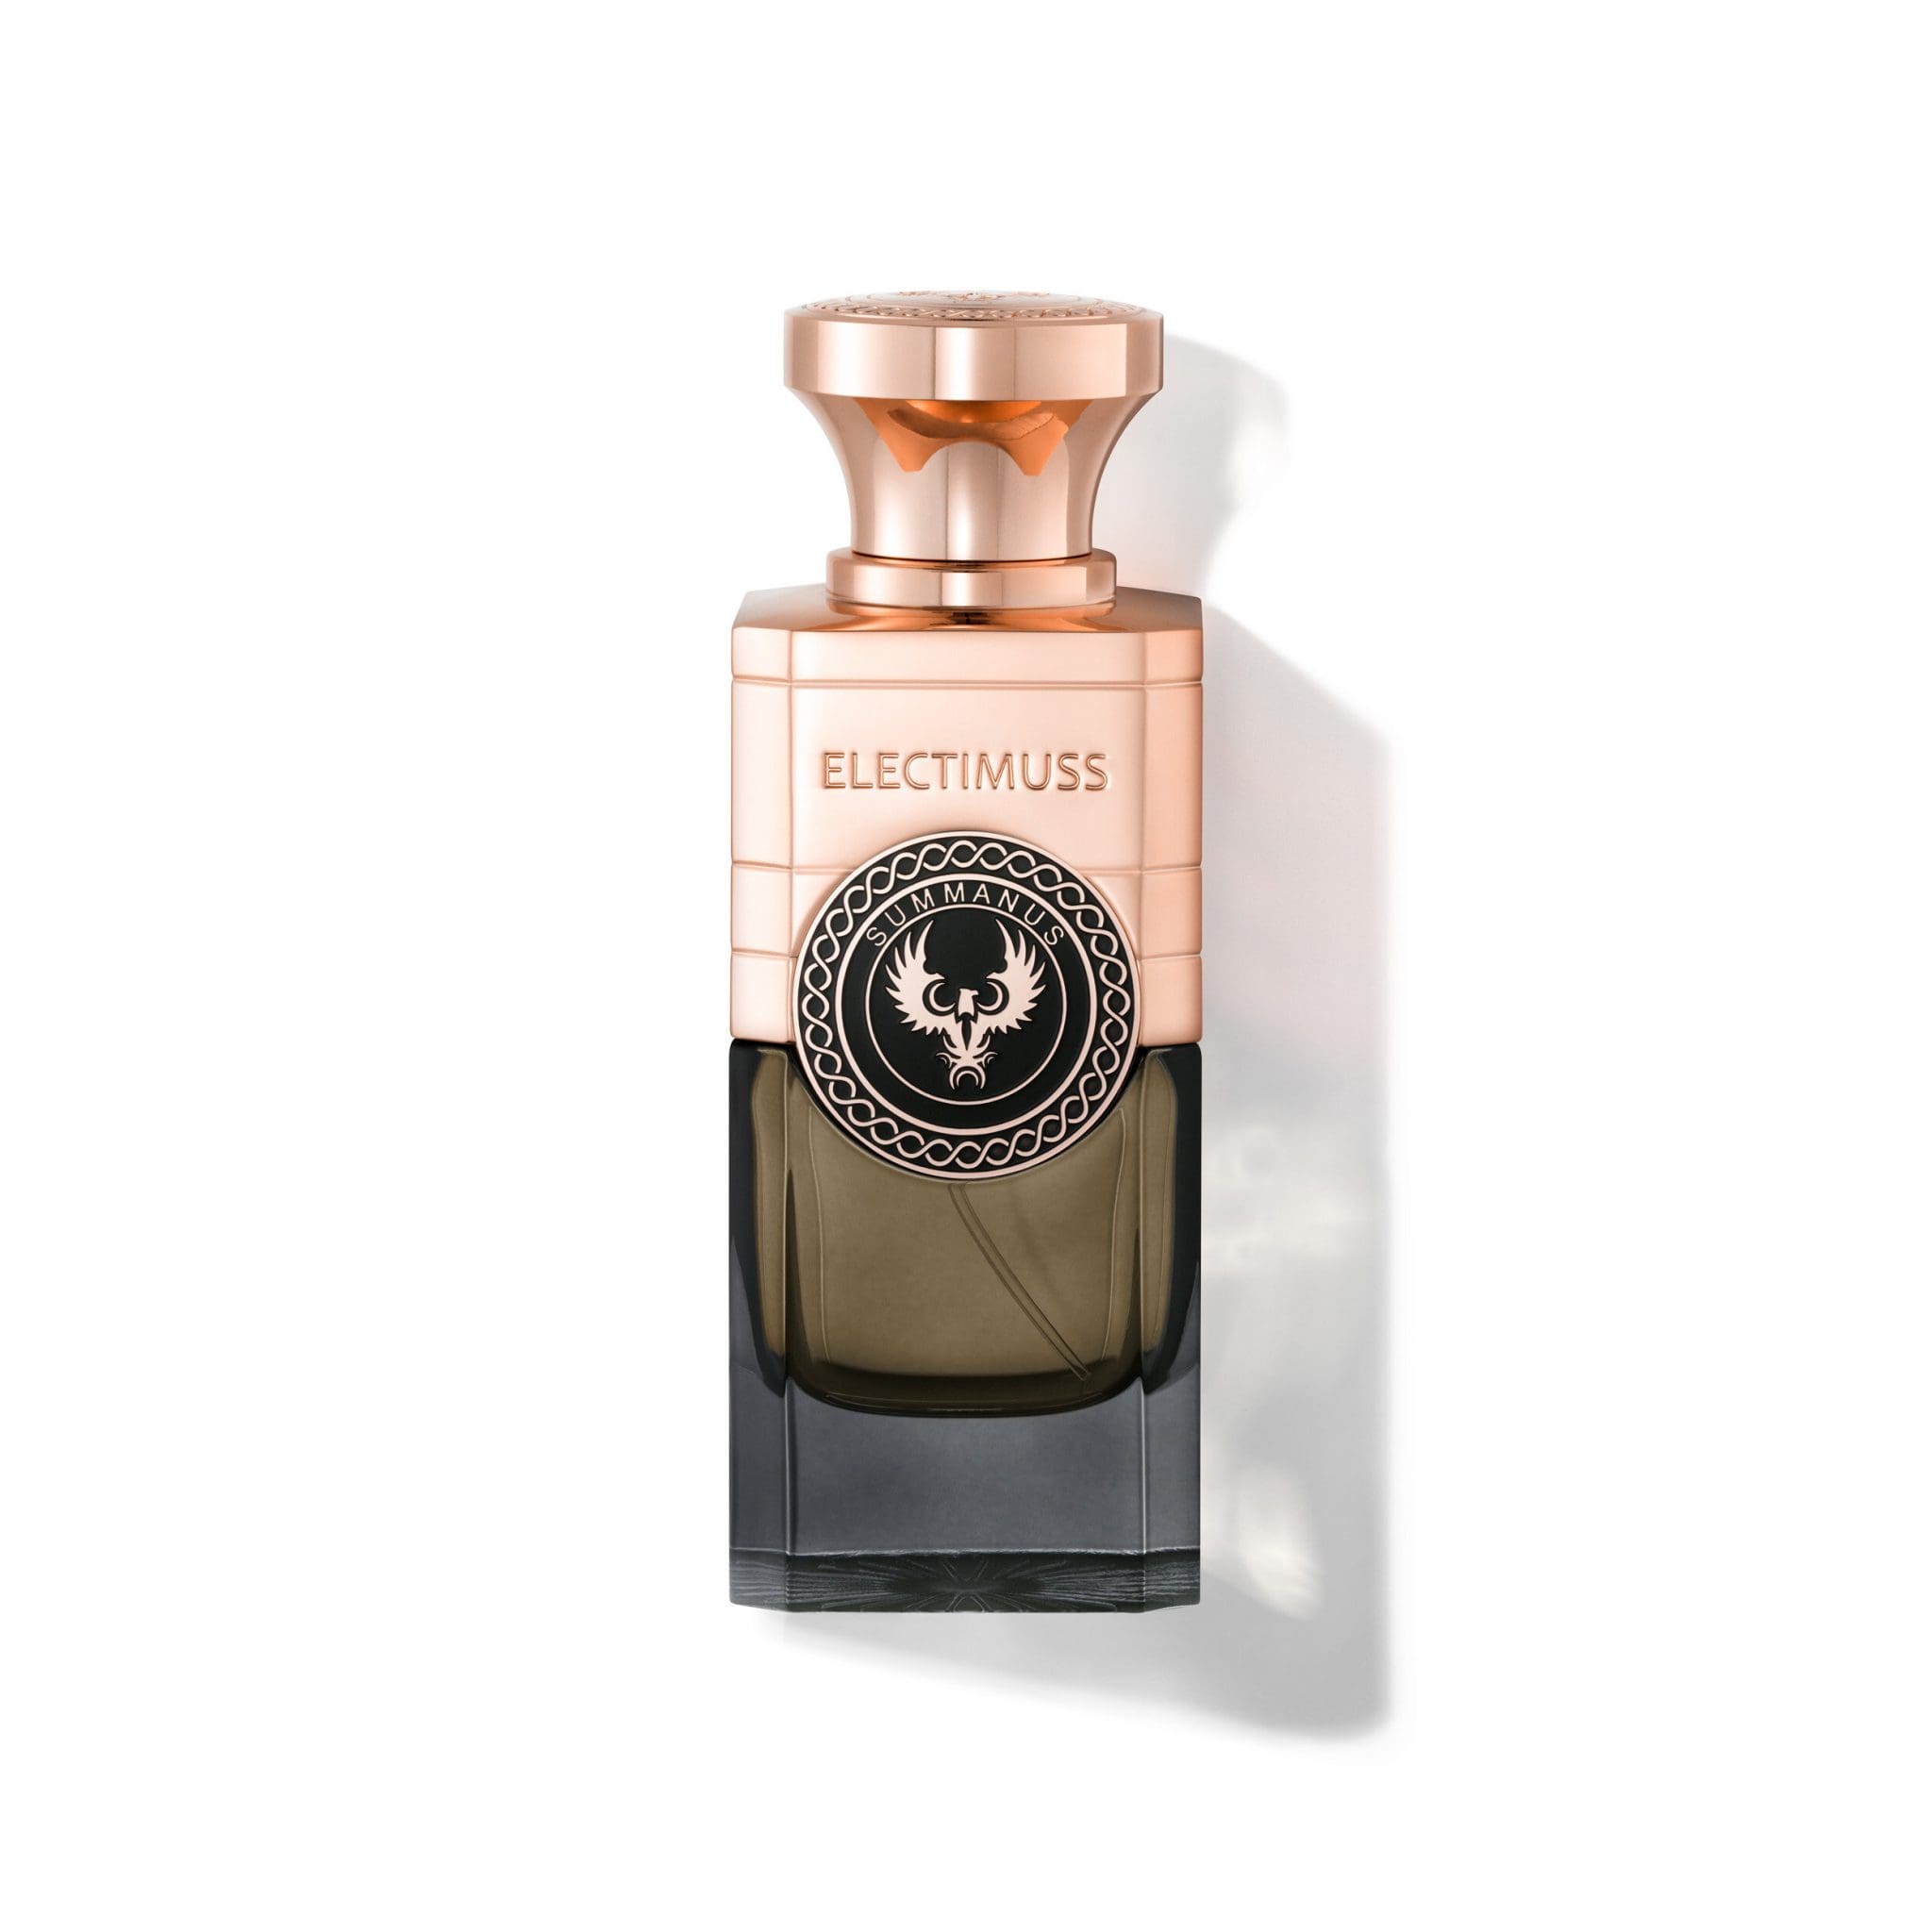 Electimuss fragrance, 100ml bottle of perfume